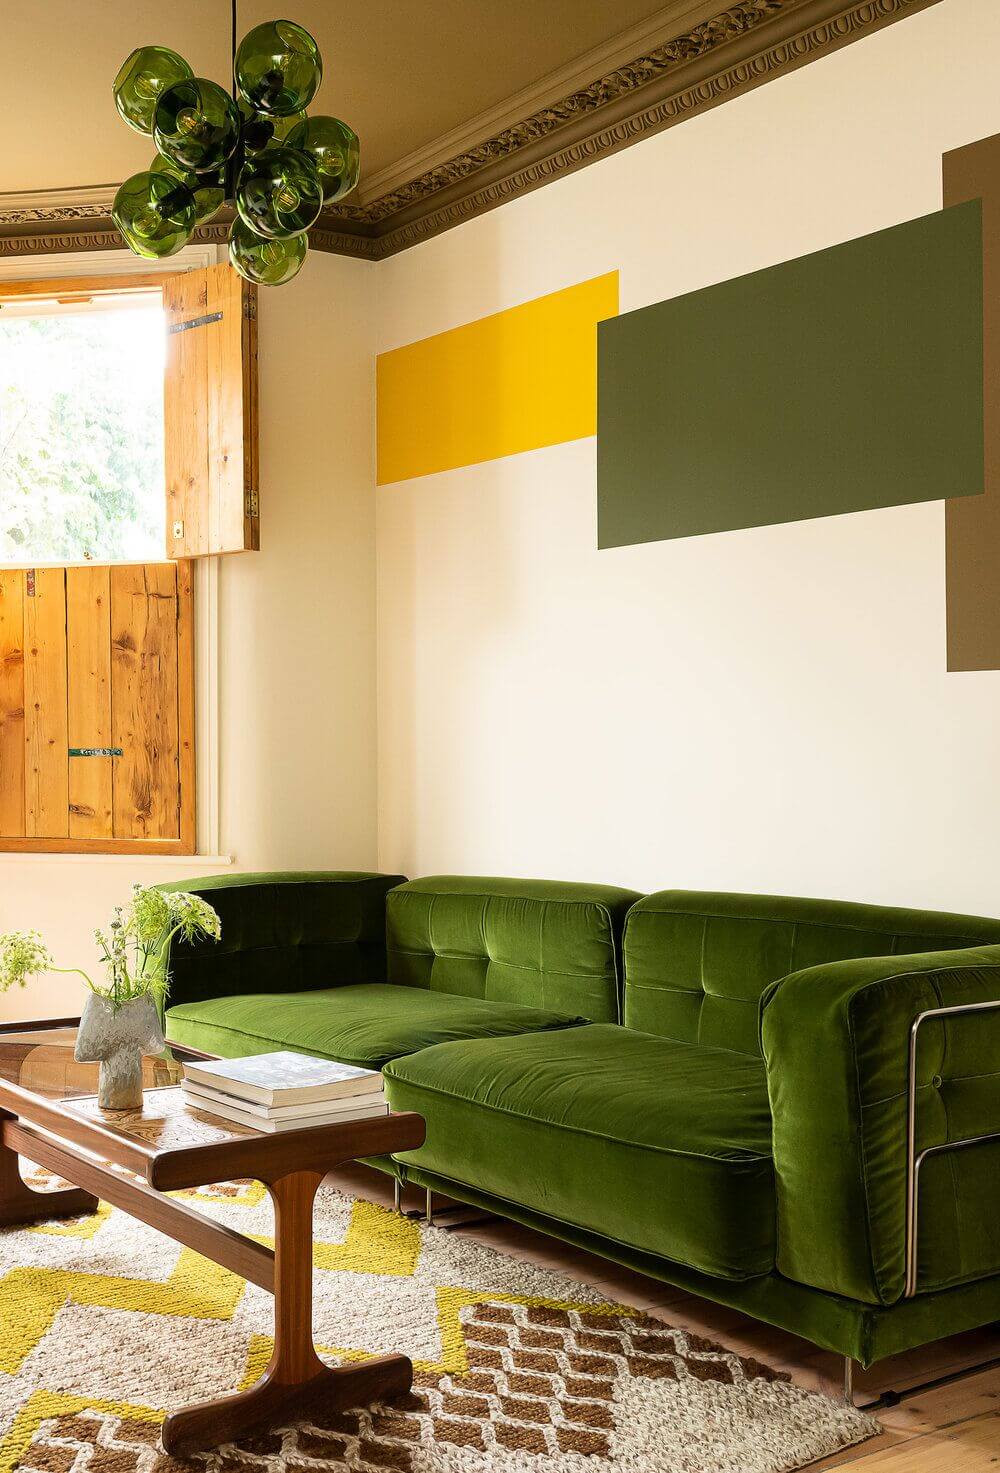 green-velvet-sofa-color-blocked-walls-olive-green-ceiling-nordroom